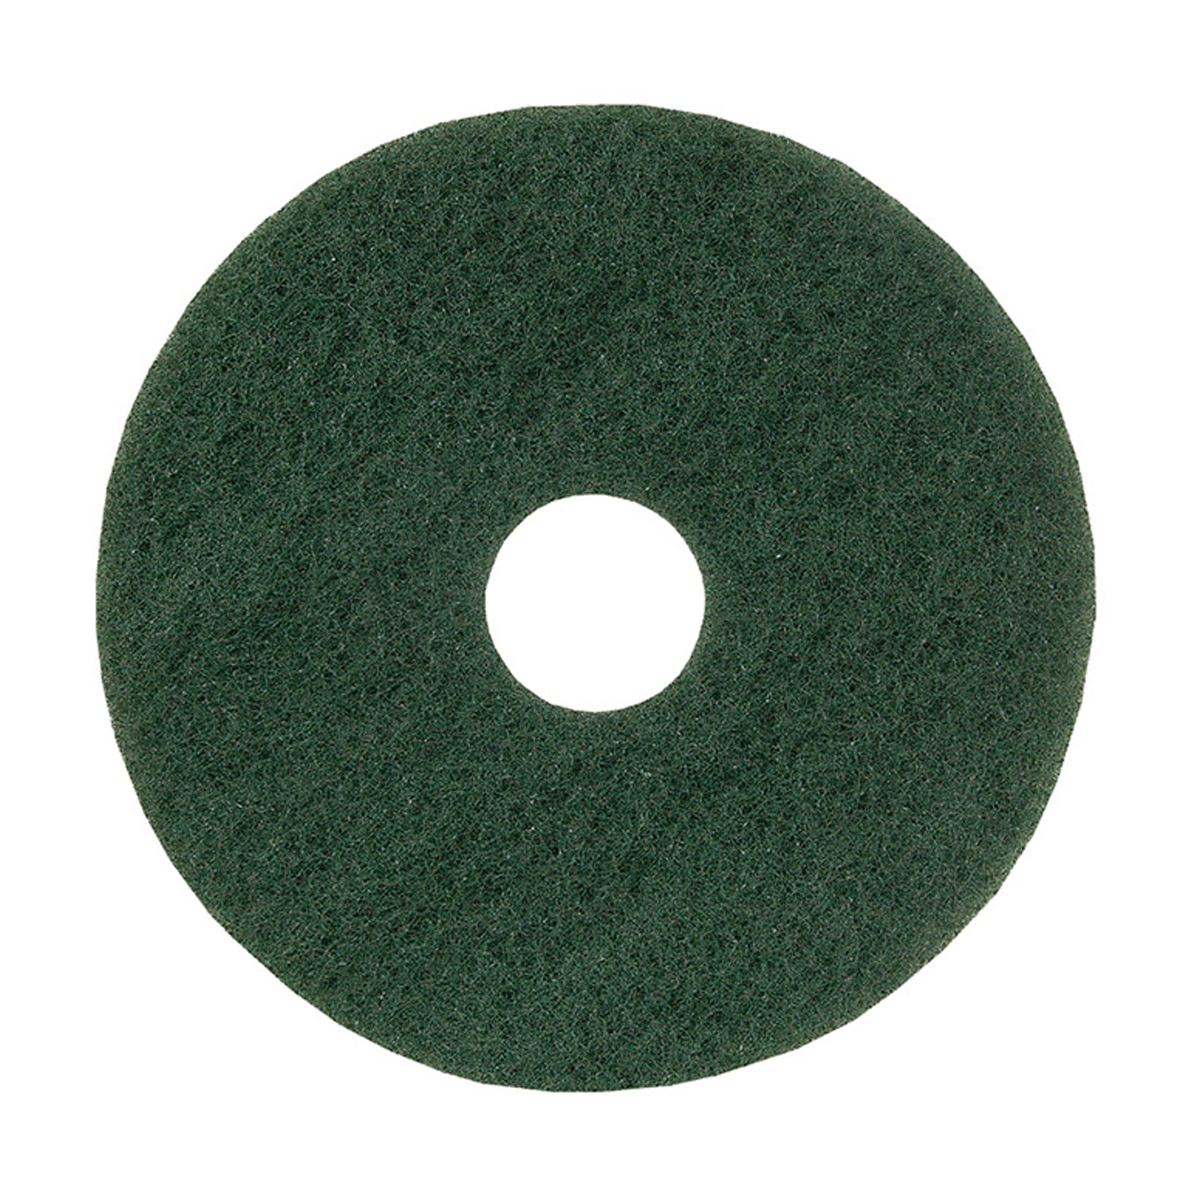 Standard speed floor pads 16 inch - green - box of 5